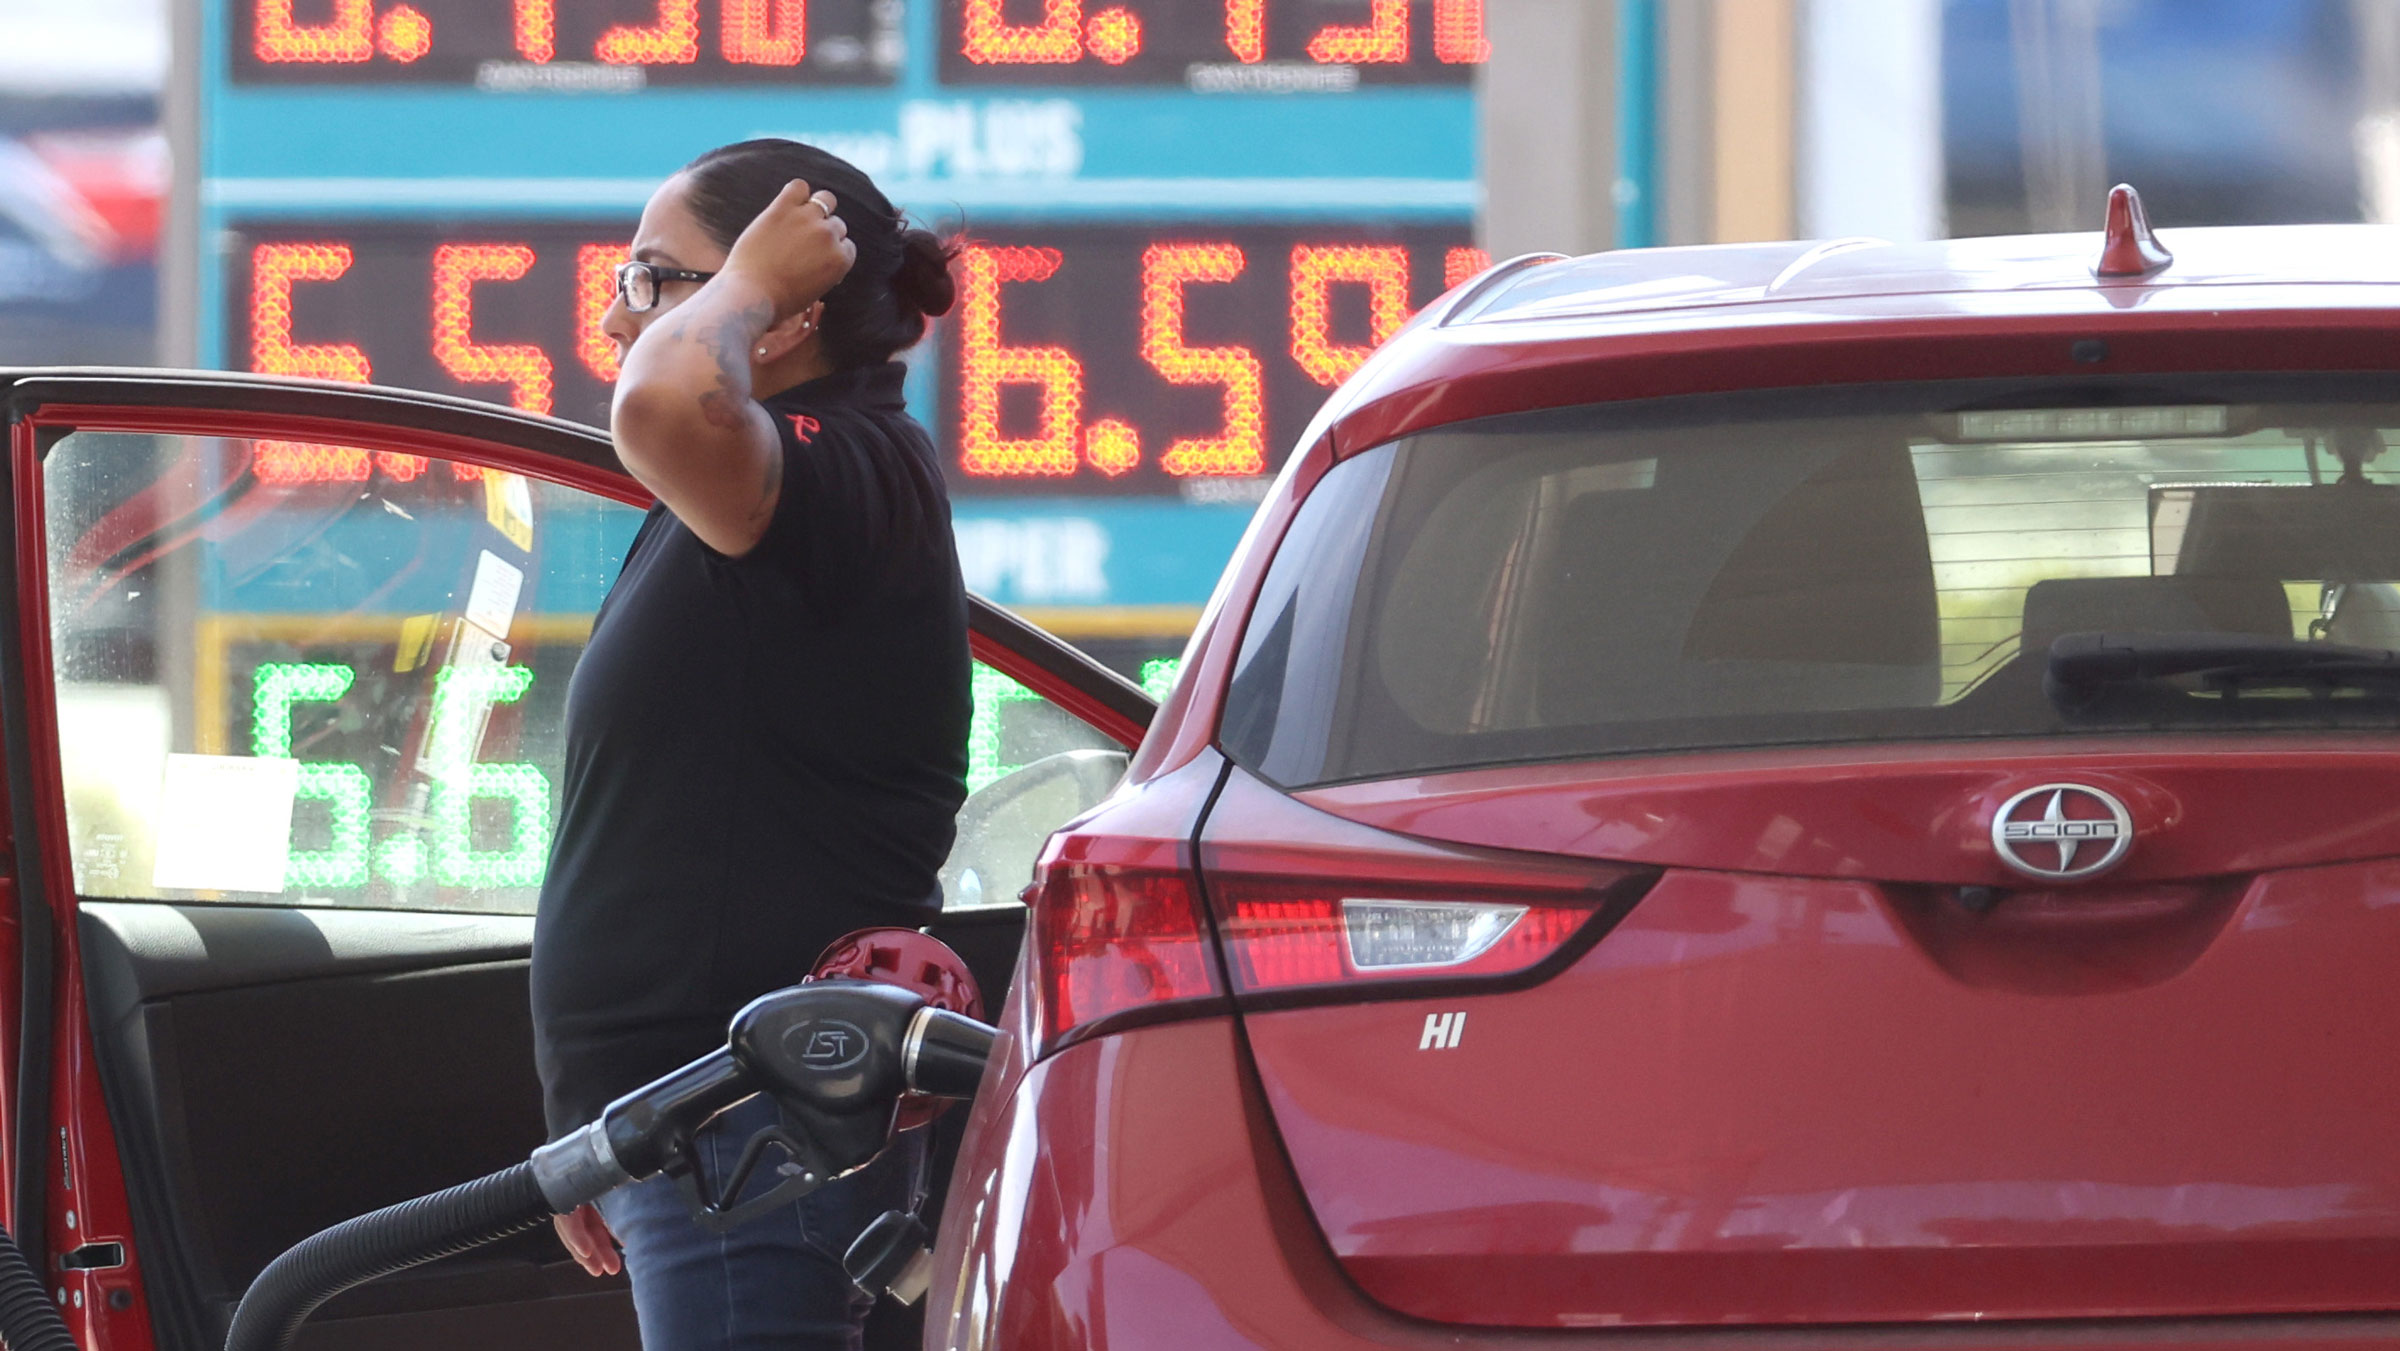 A customer pumps gas into their car in Petaluma, California, last month.